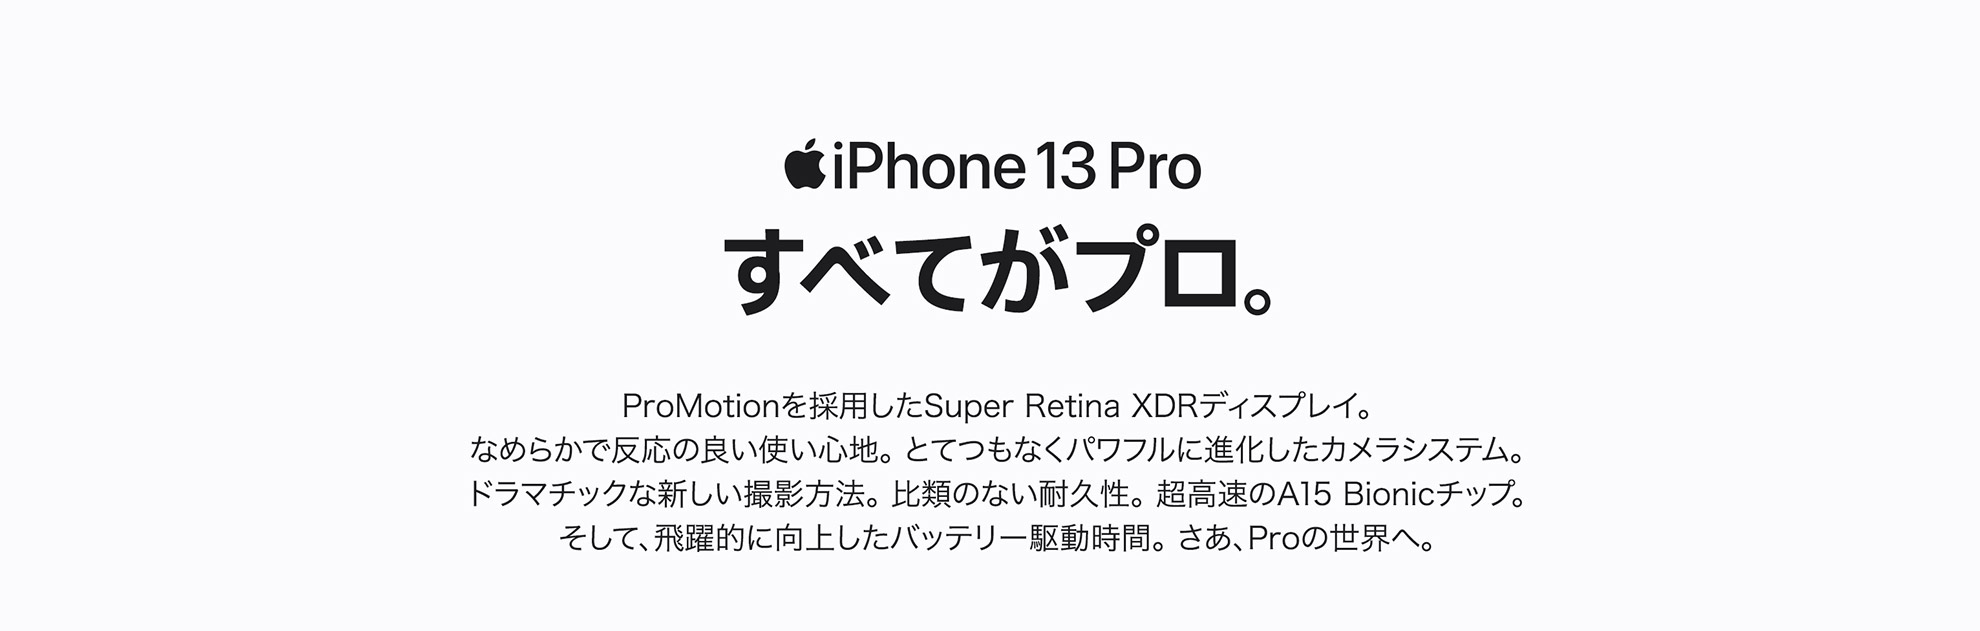 iPhone 13 Pro・iPhone 13 Pro Max